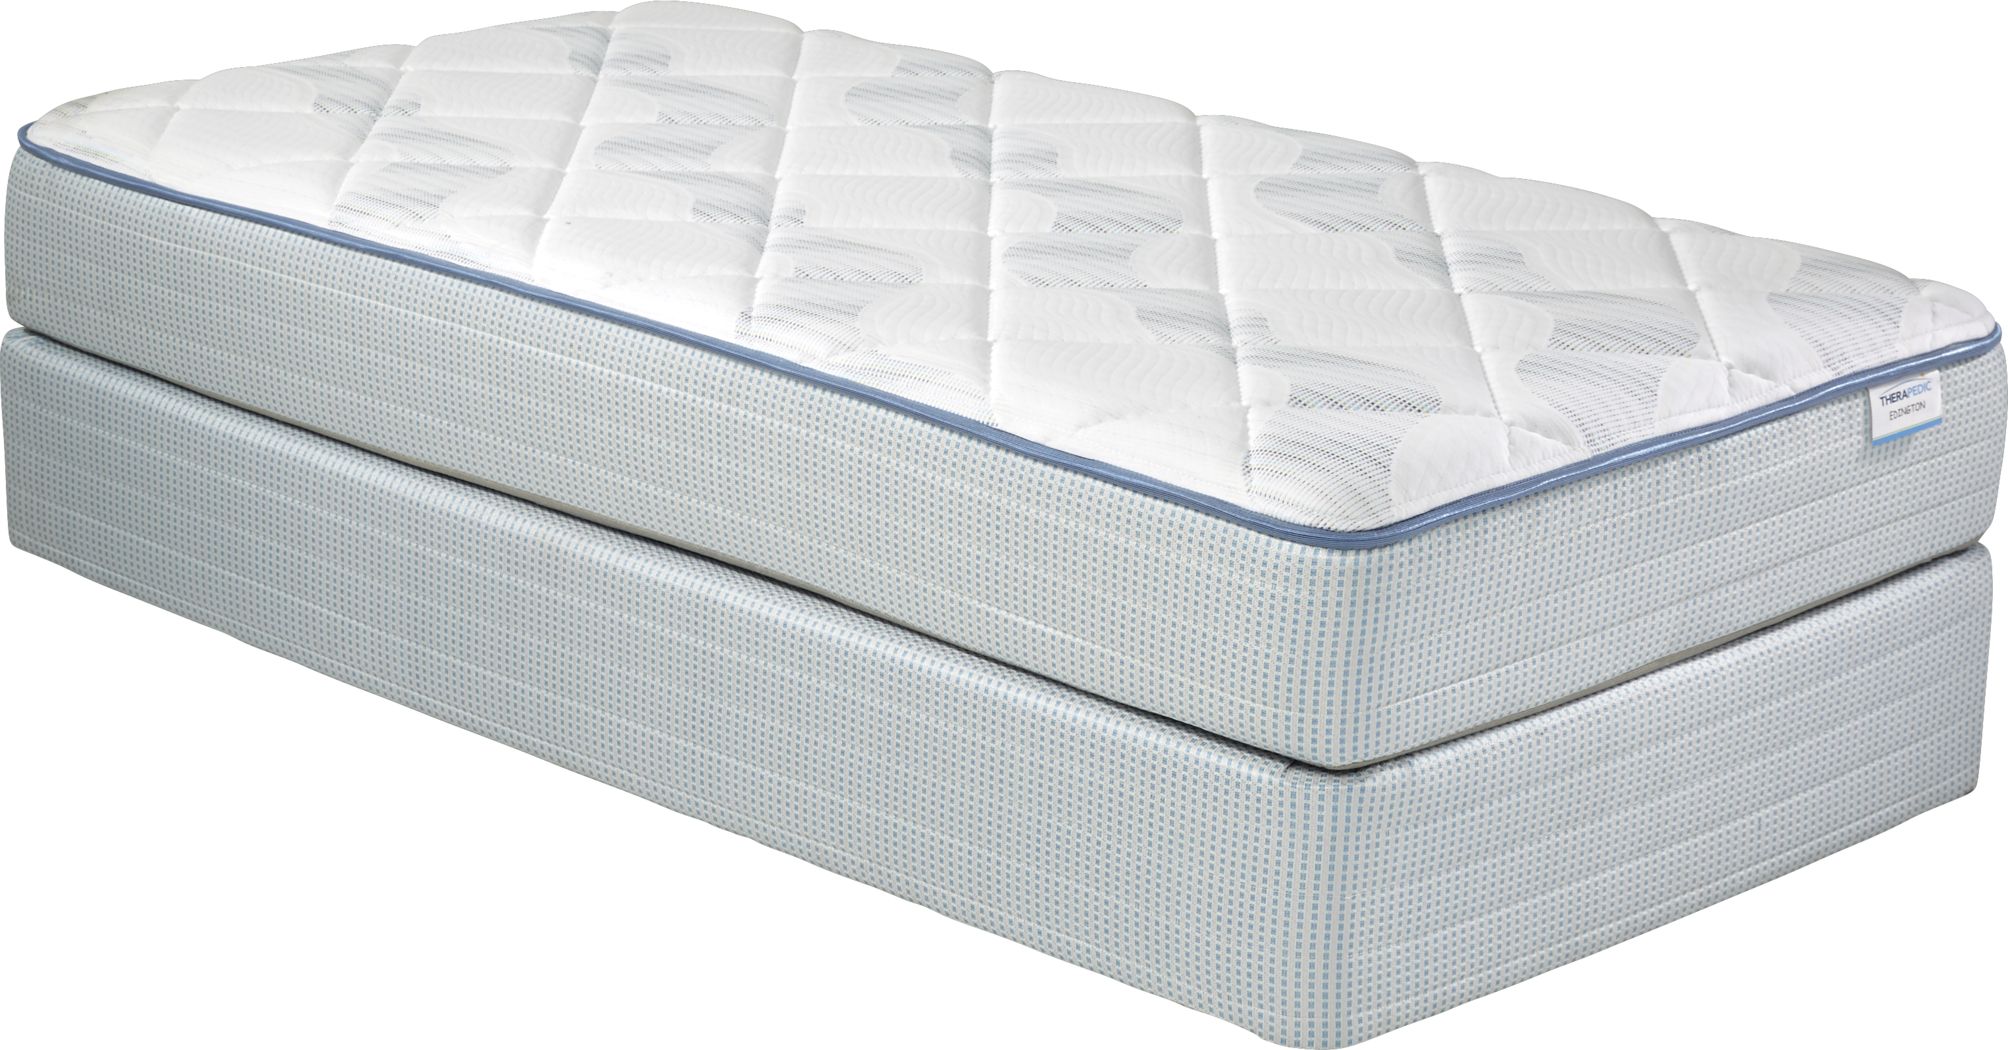 therapedic comfort deluxe twin mattress